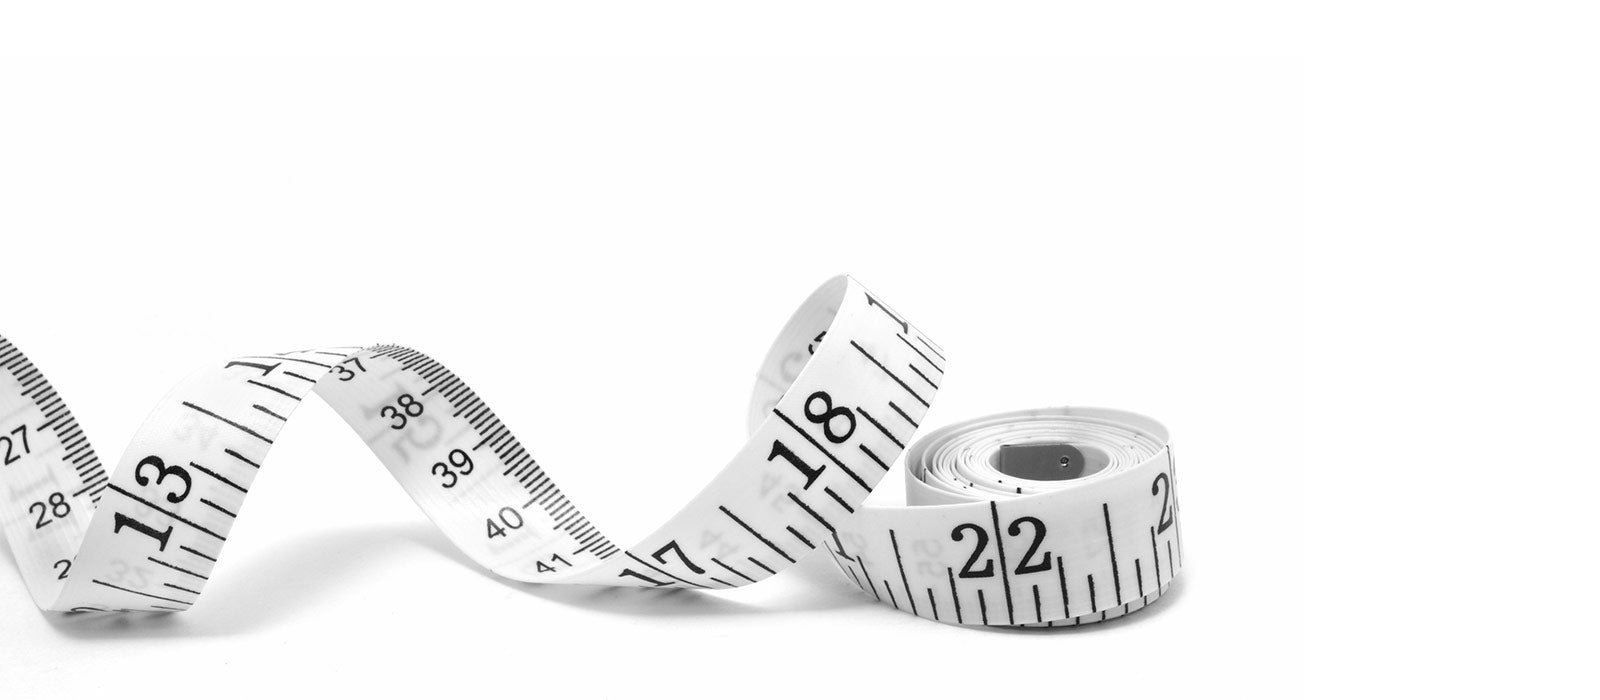 How To Measure Sleeve Length